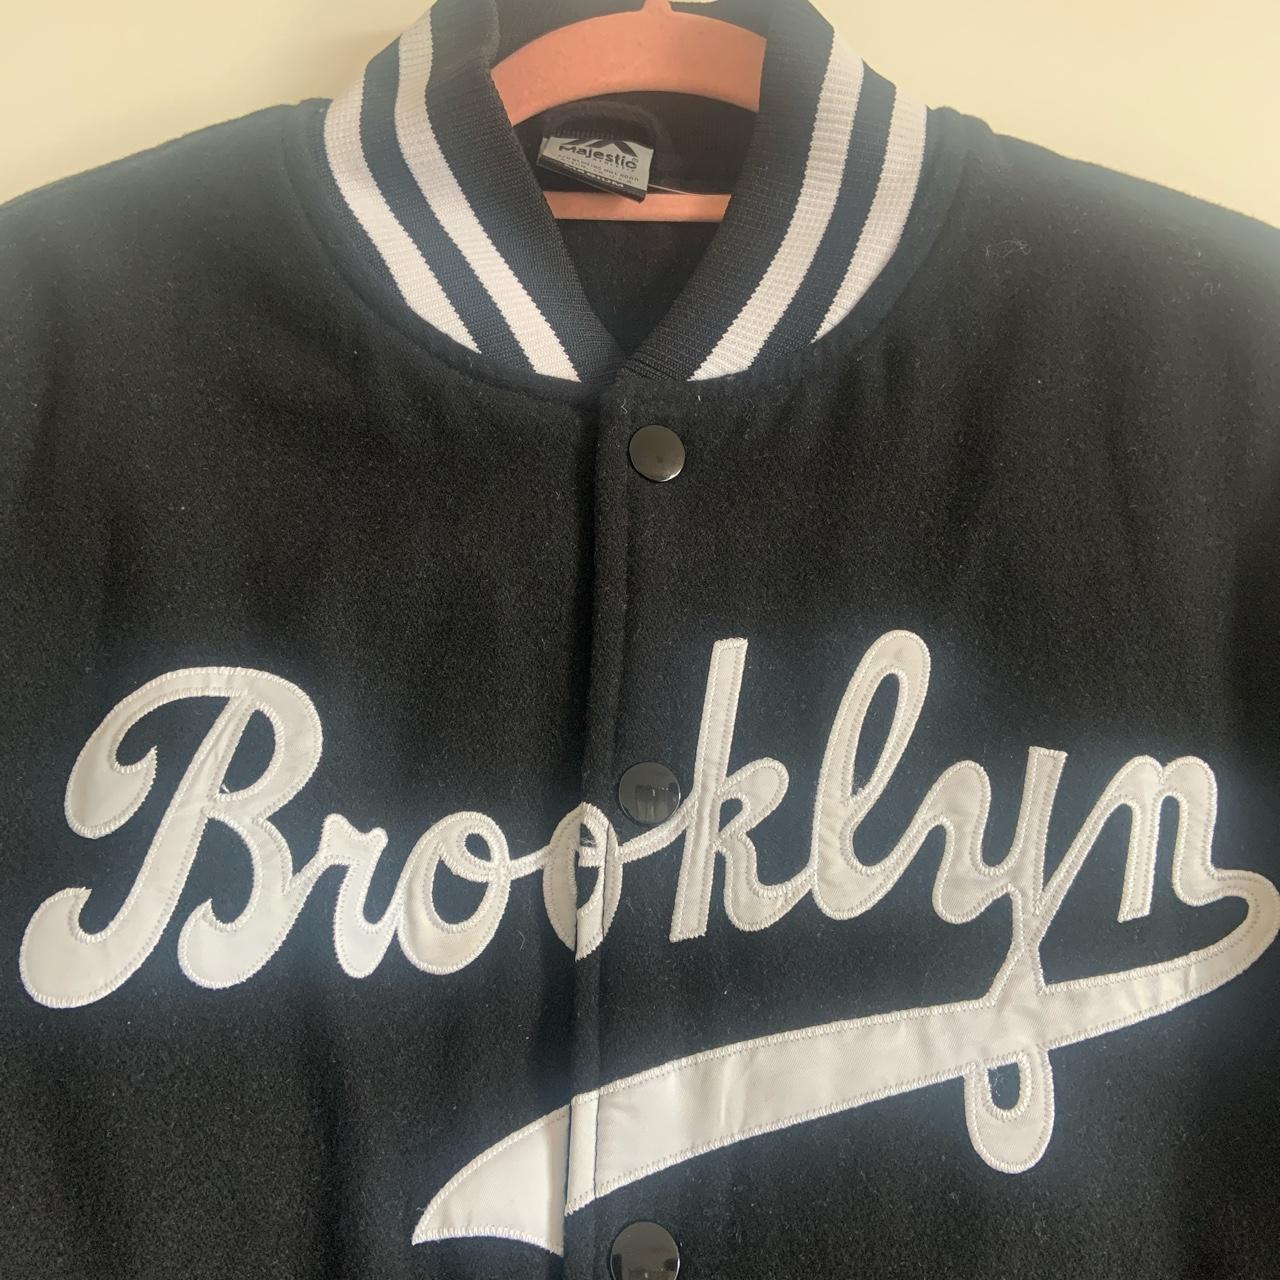 Majestic Athletic Brooklyn Bomber Jacket